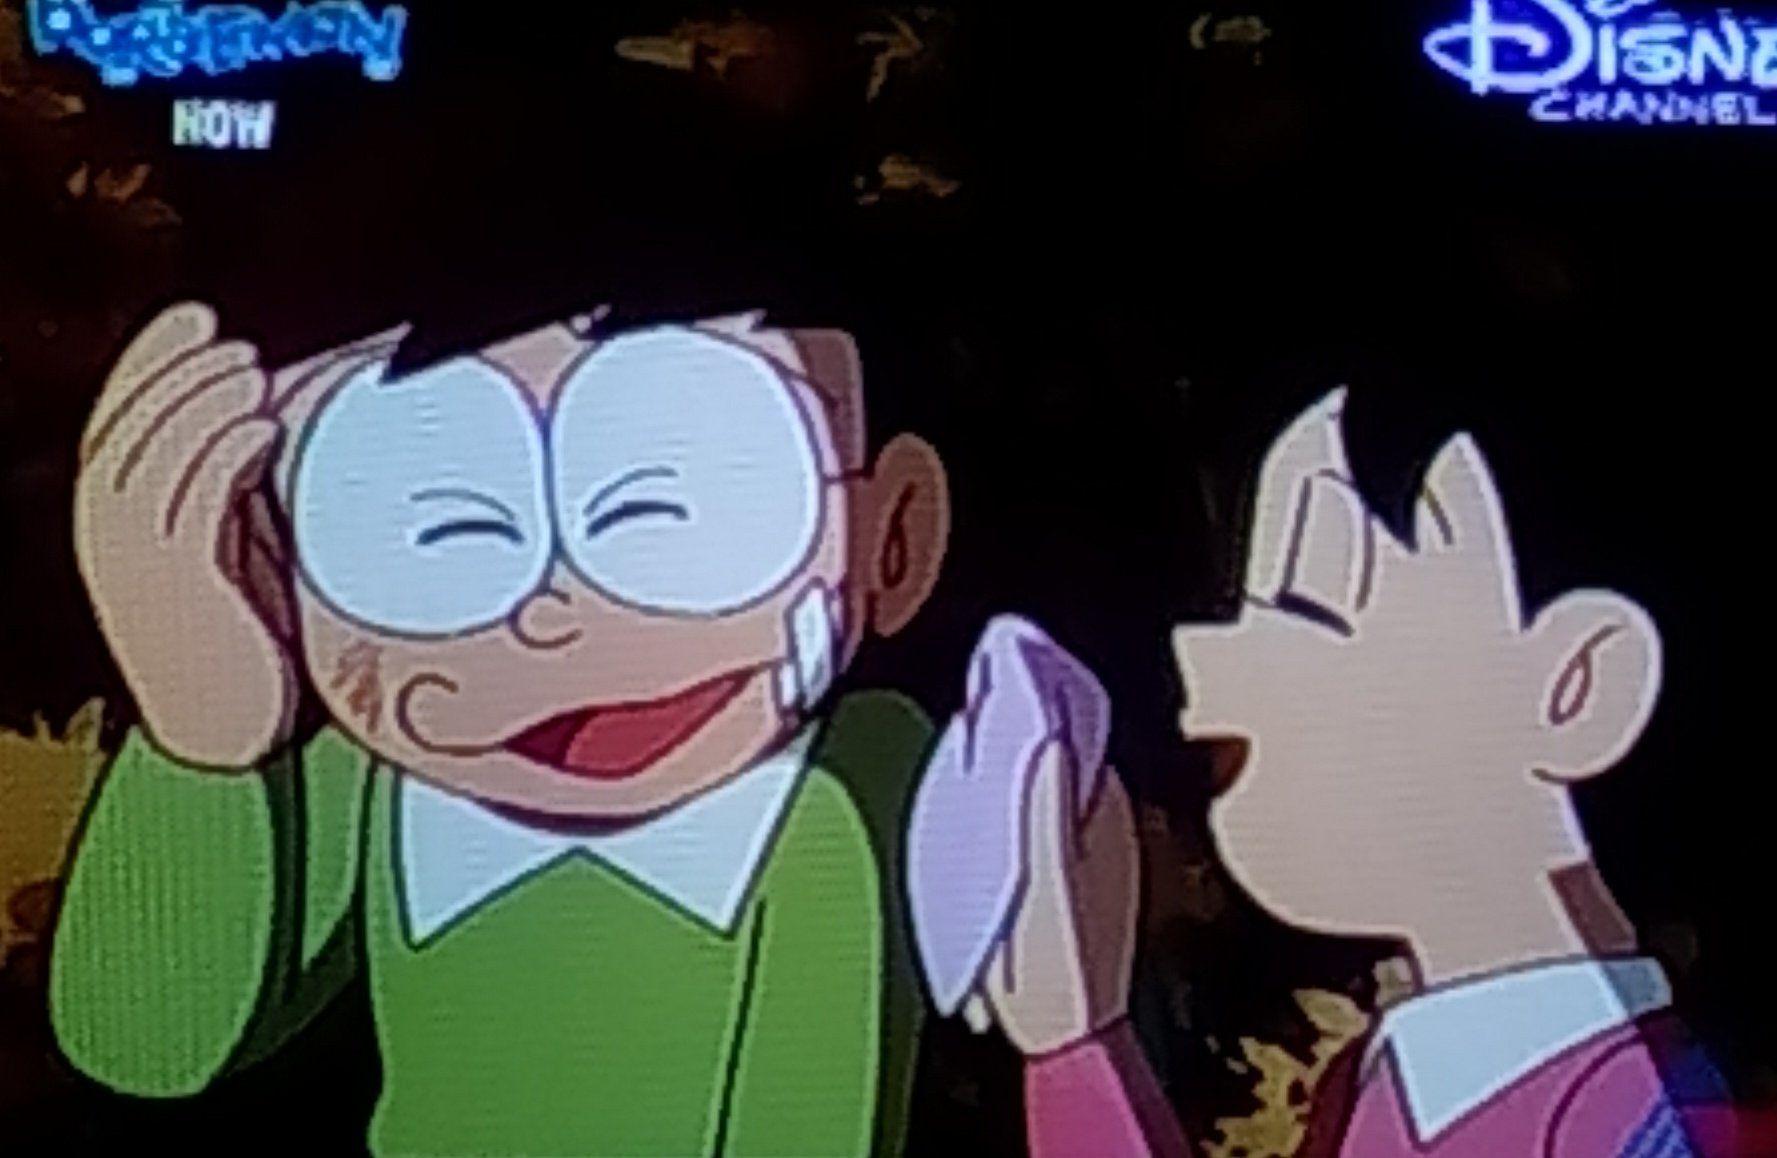 Shizuka Doraemon, HD Png Download , Transparent Png Image - PNGitem